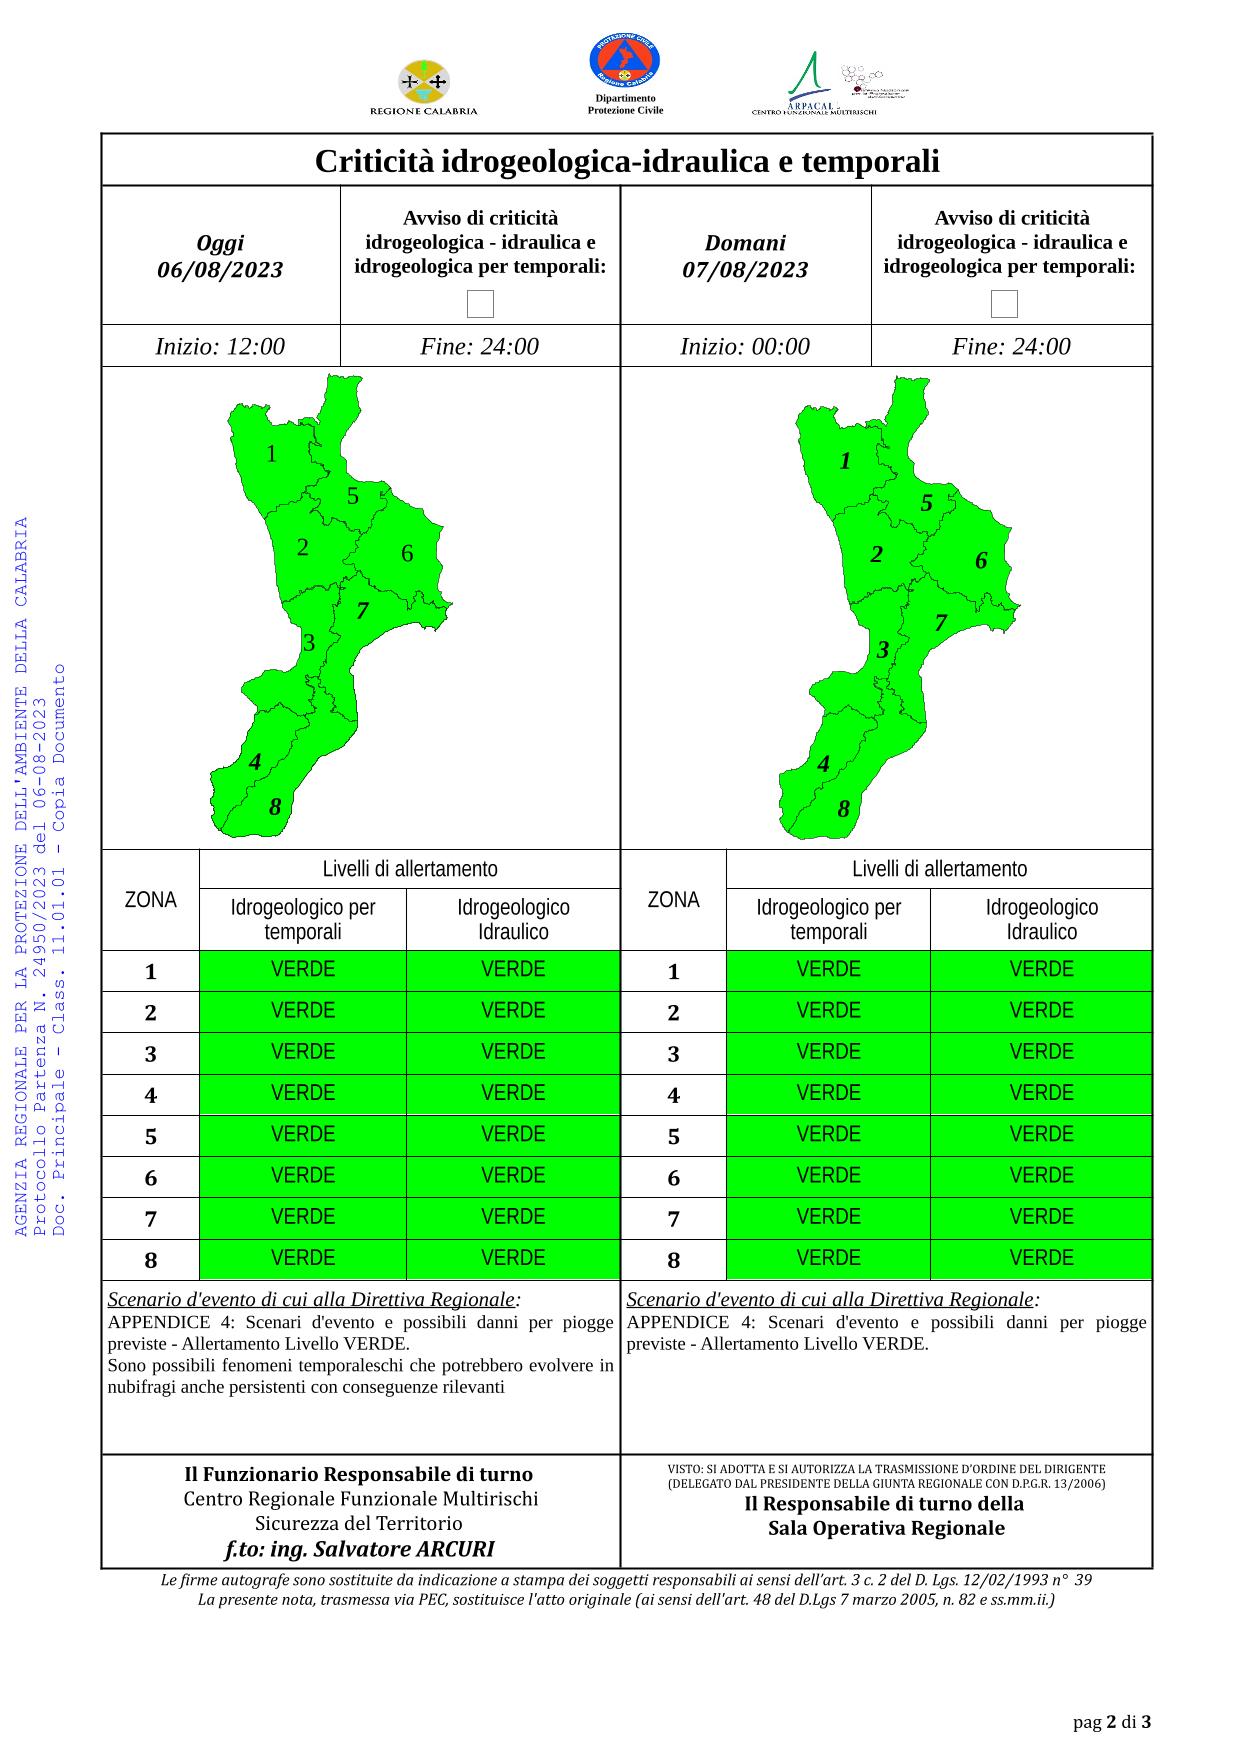 Criticità idrogeologica-idraulica e temporali in Calabria 06-08-2023